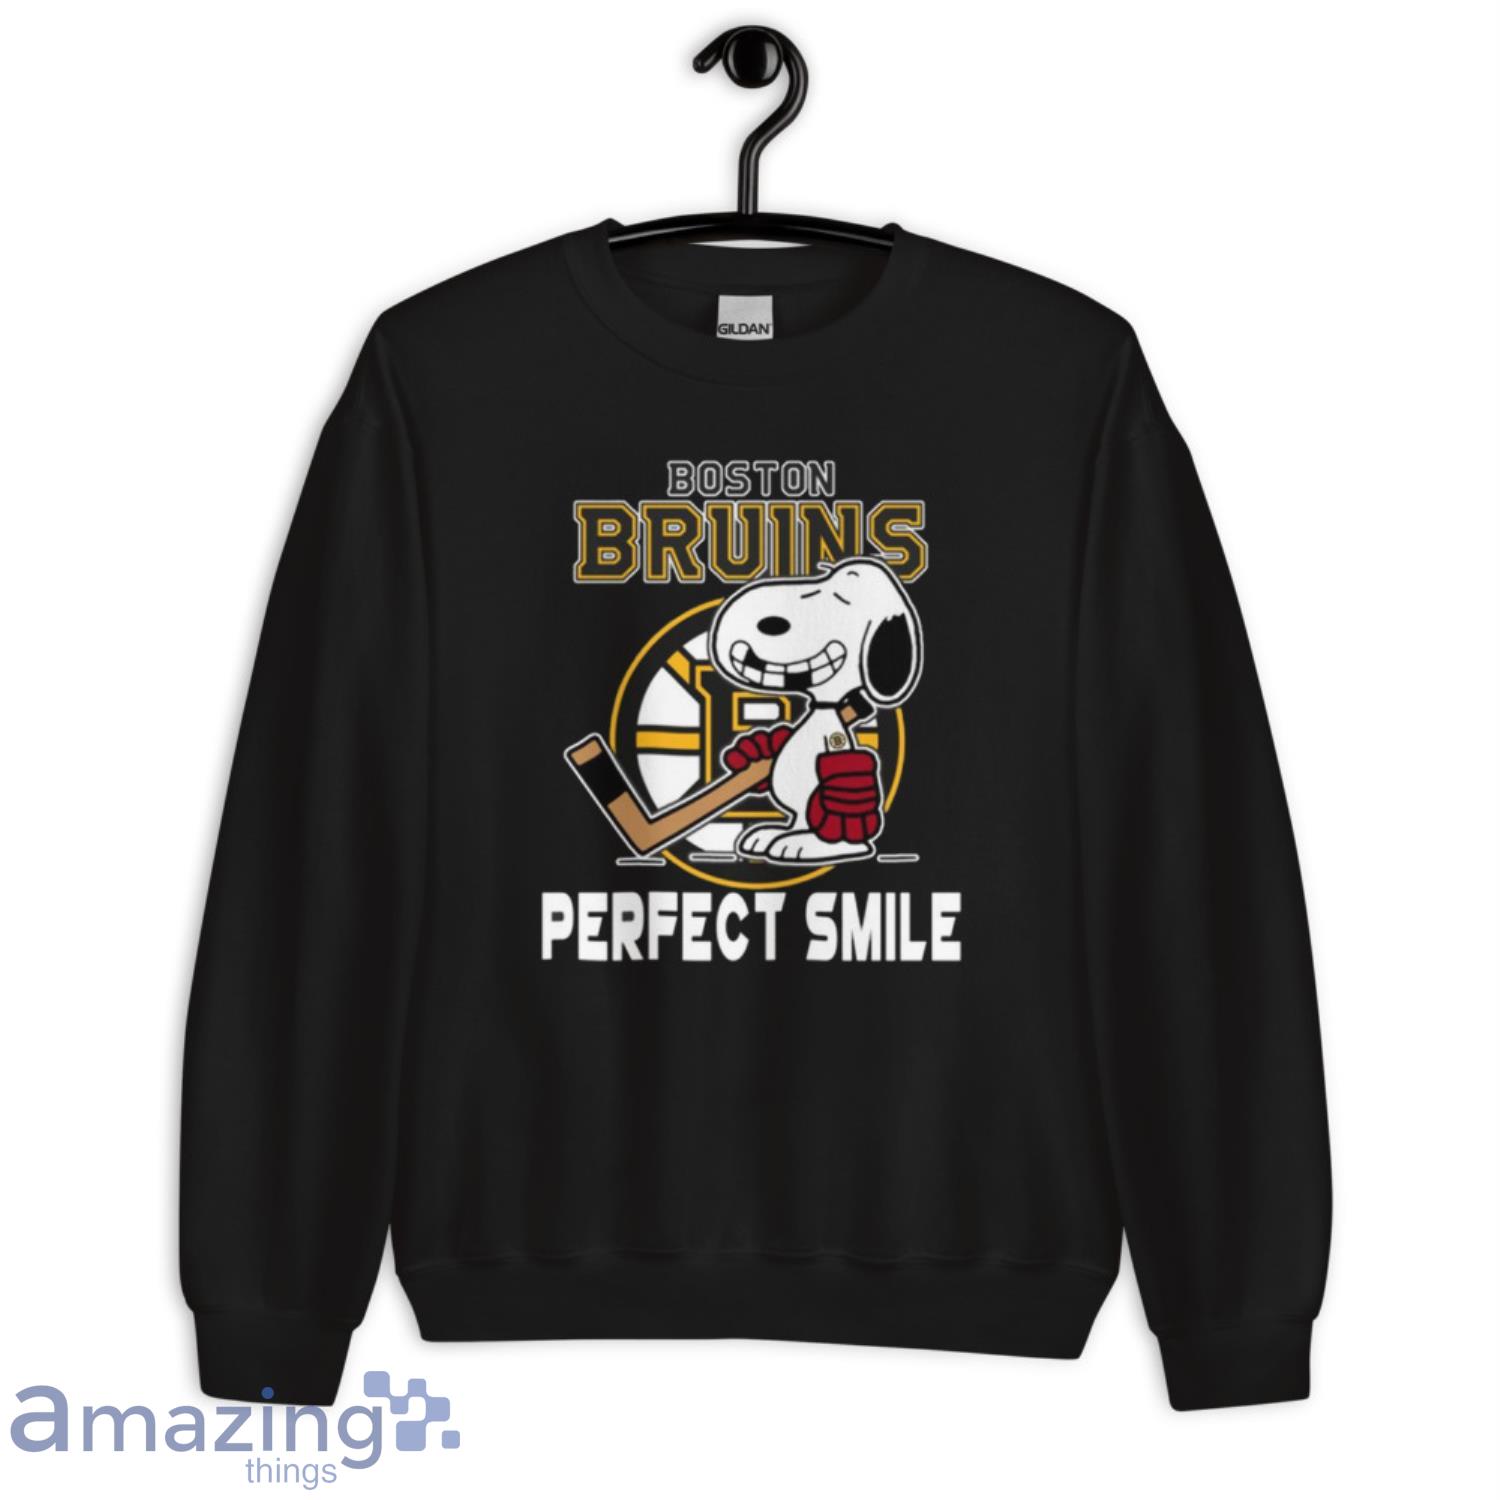 Vintage boston bruins sweatshirt hockey - Ingenious Gifts Your